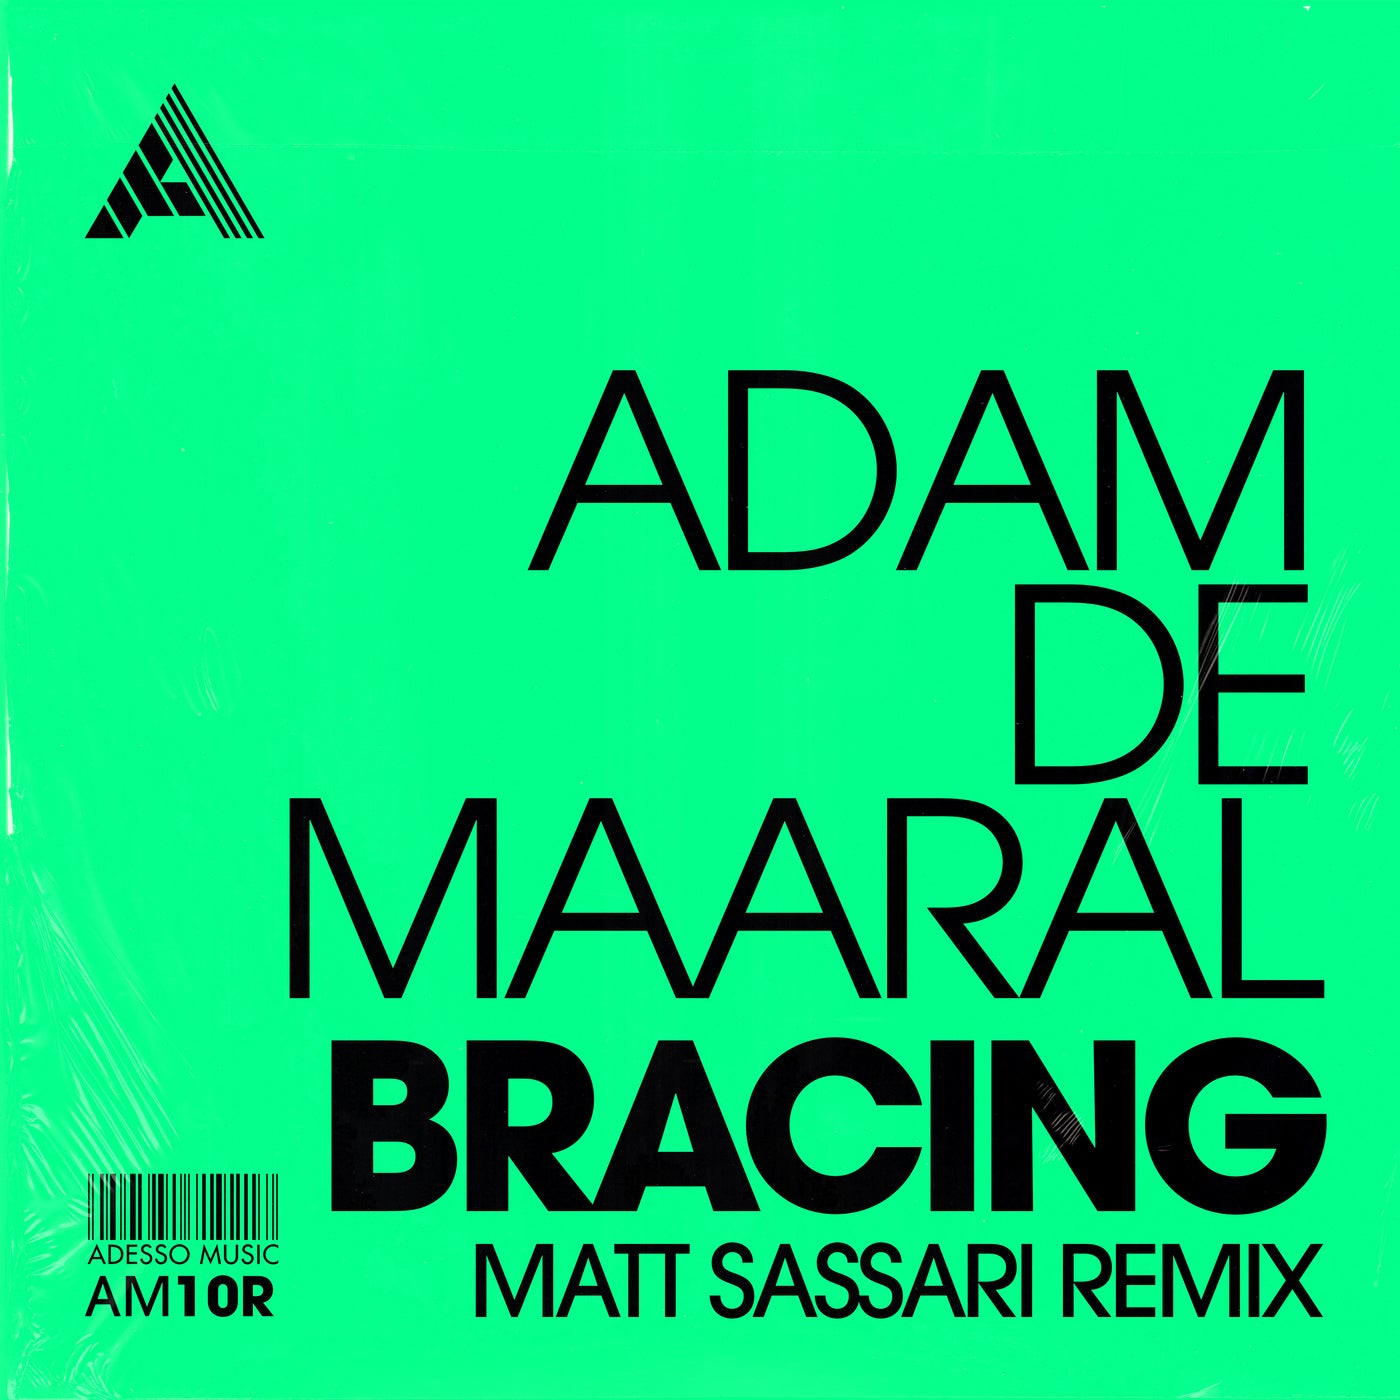 Bracing (Matt Sassari Remix) - Extended Mix